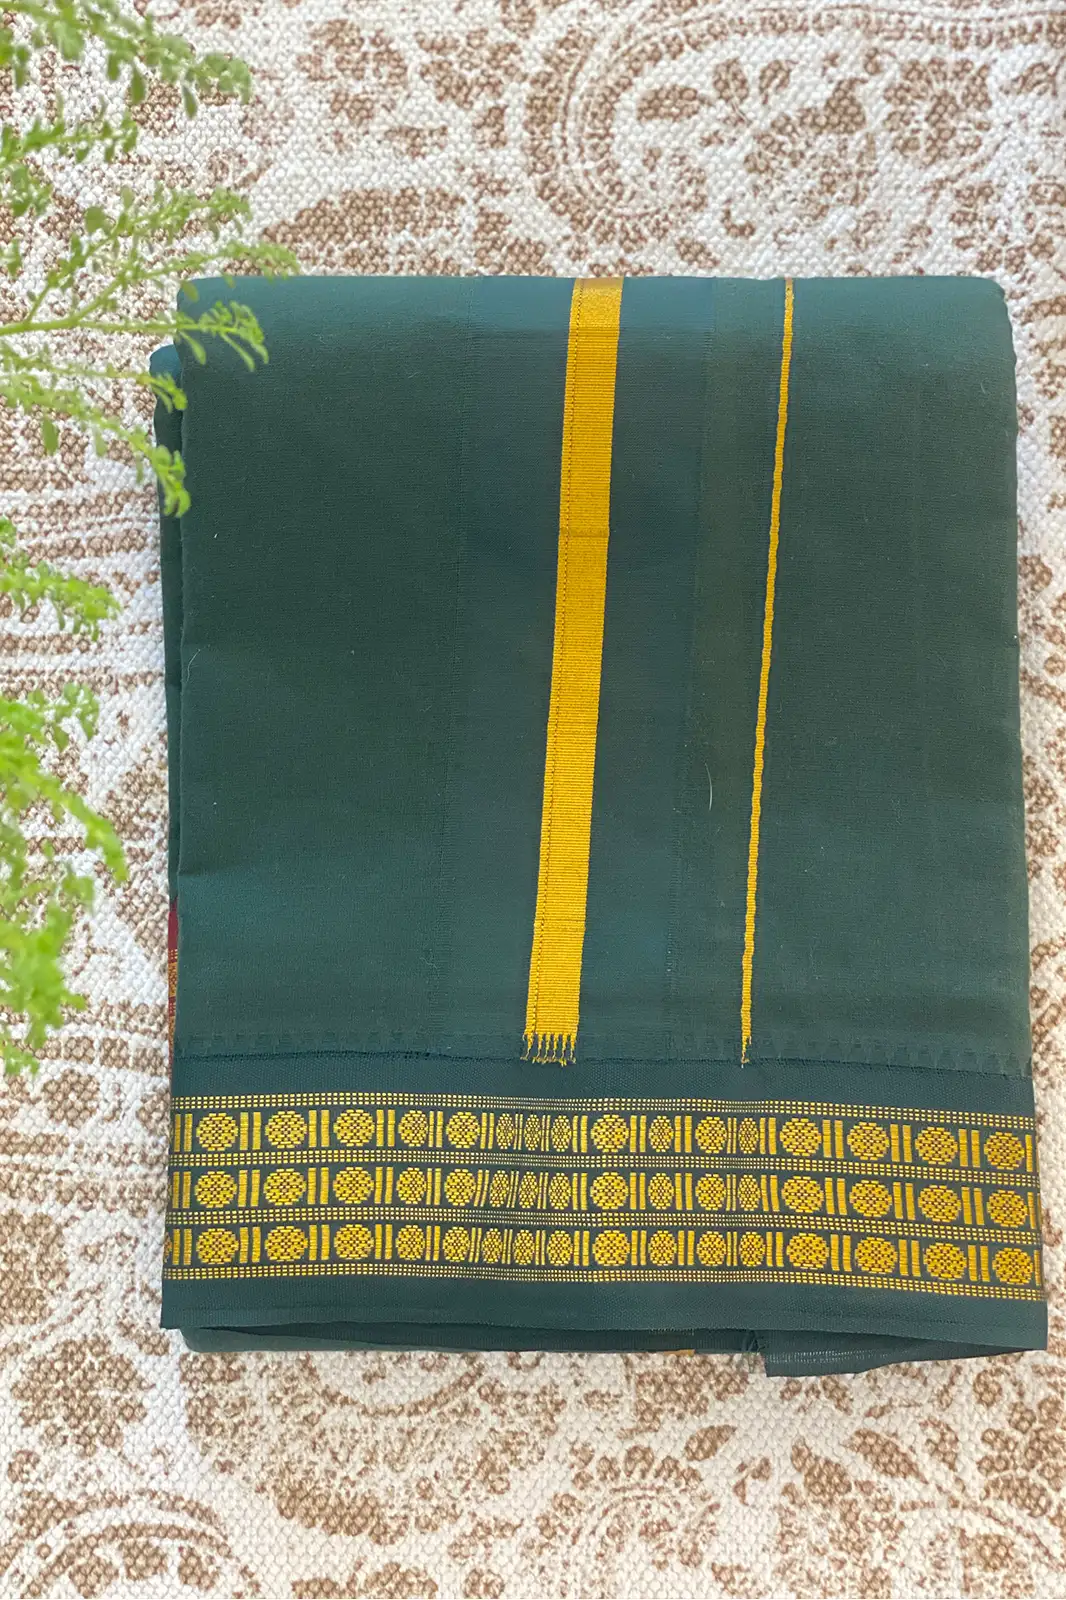 Sodoam green cotton dhoti